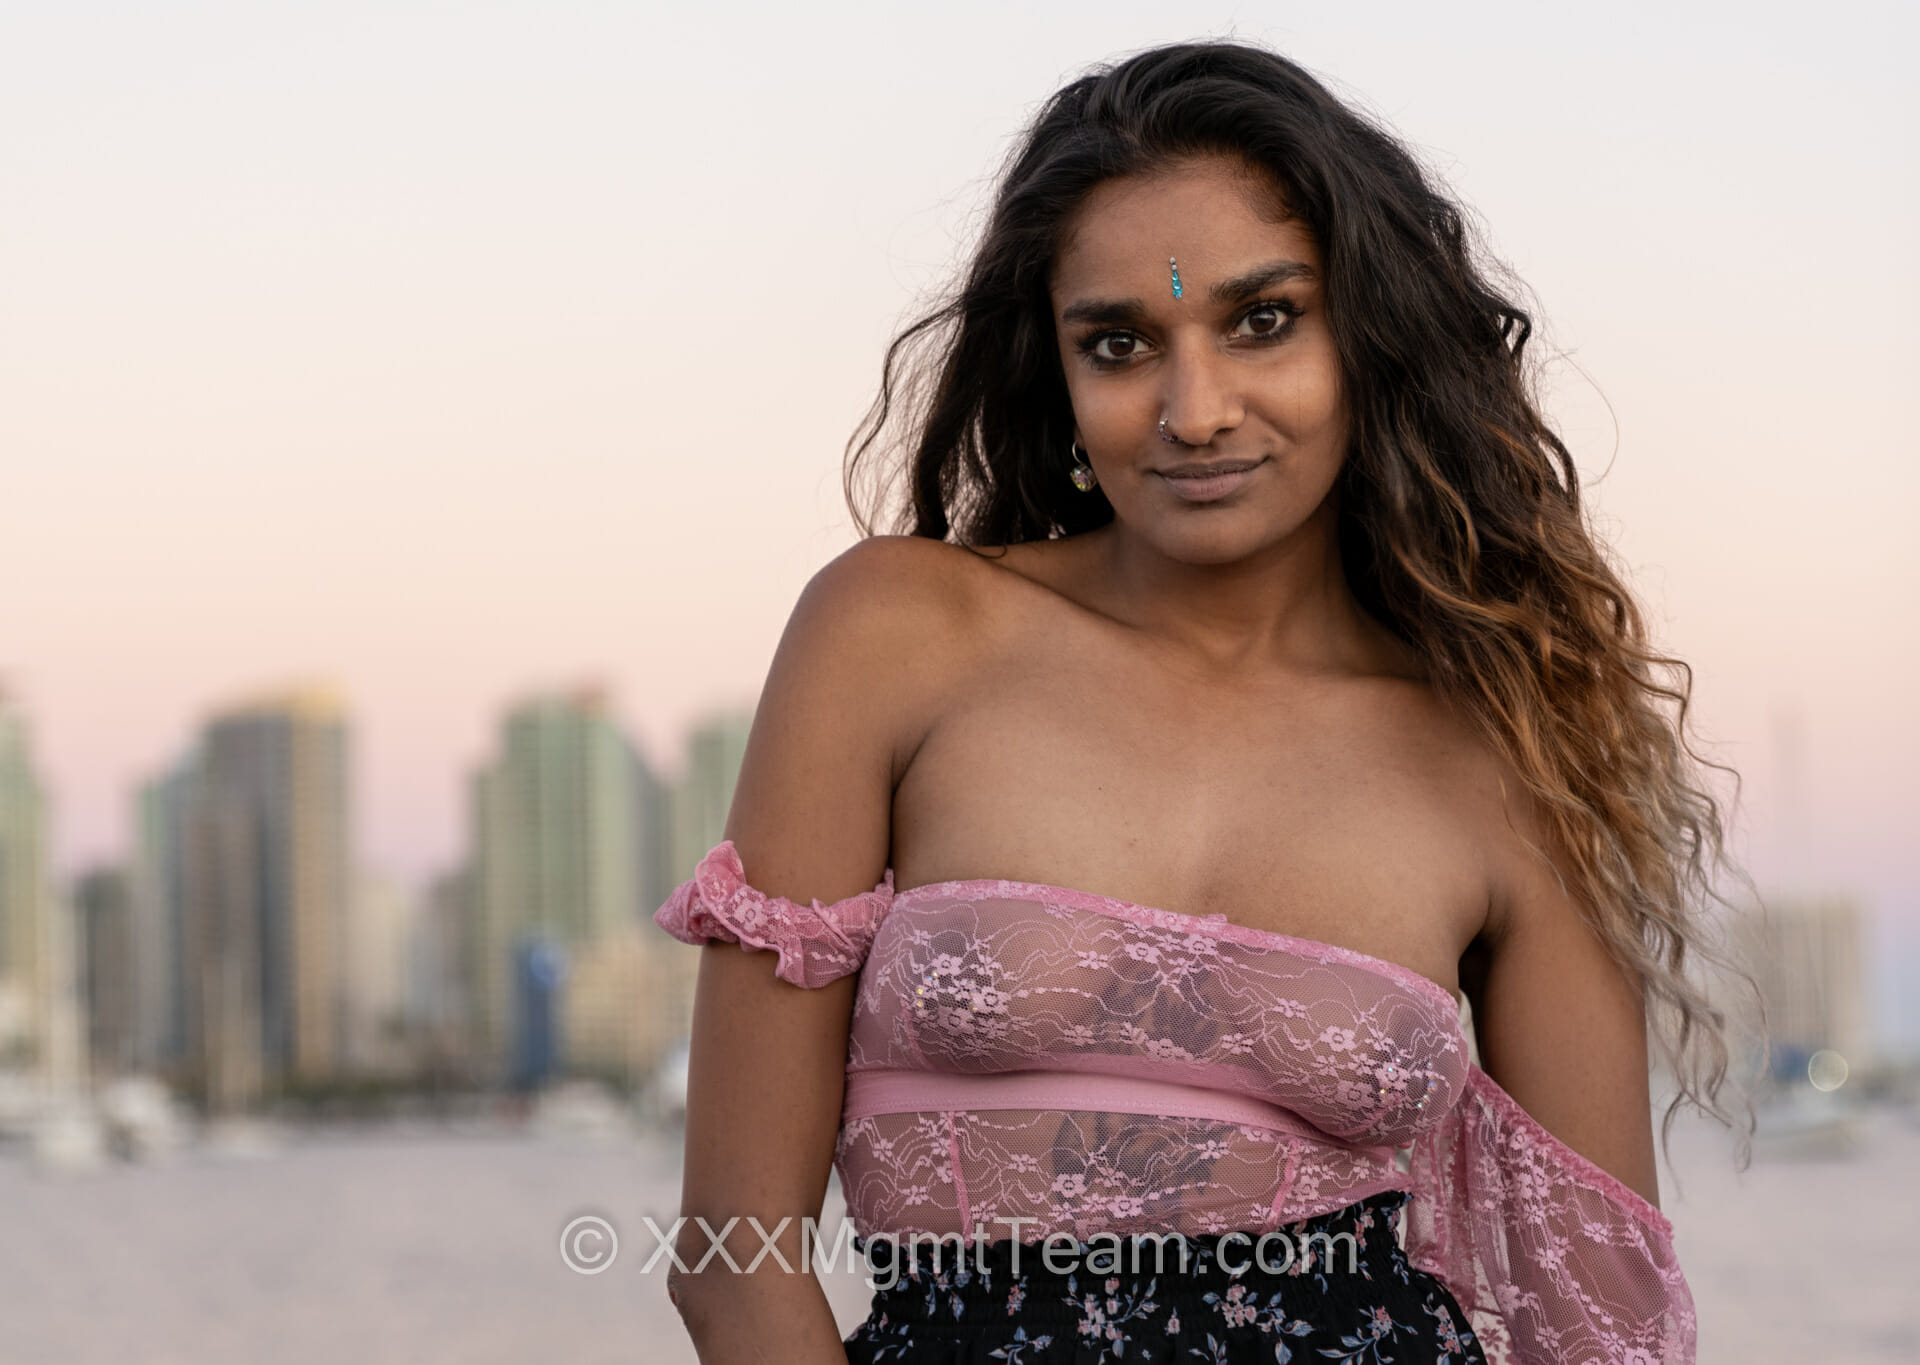 Porno Models - Siri Lanka â€“ Pornstar Profile Â» Become a Pornstar Â» Sri Lankan Model